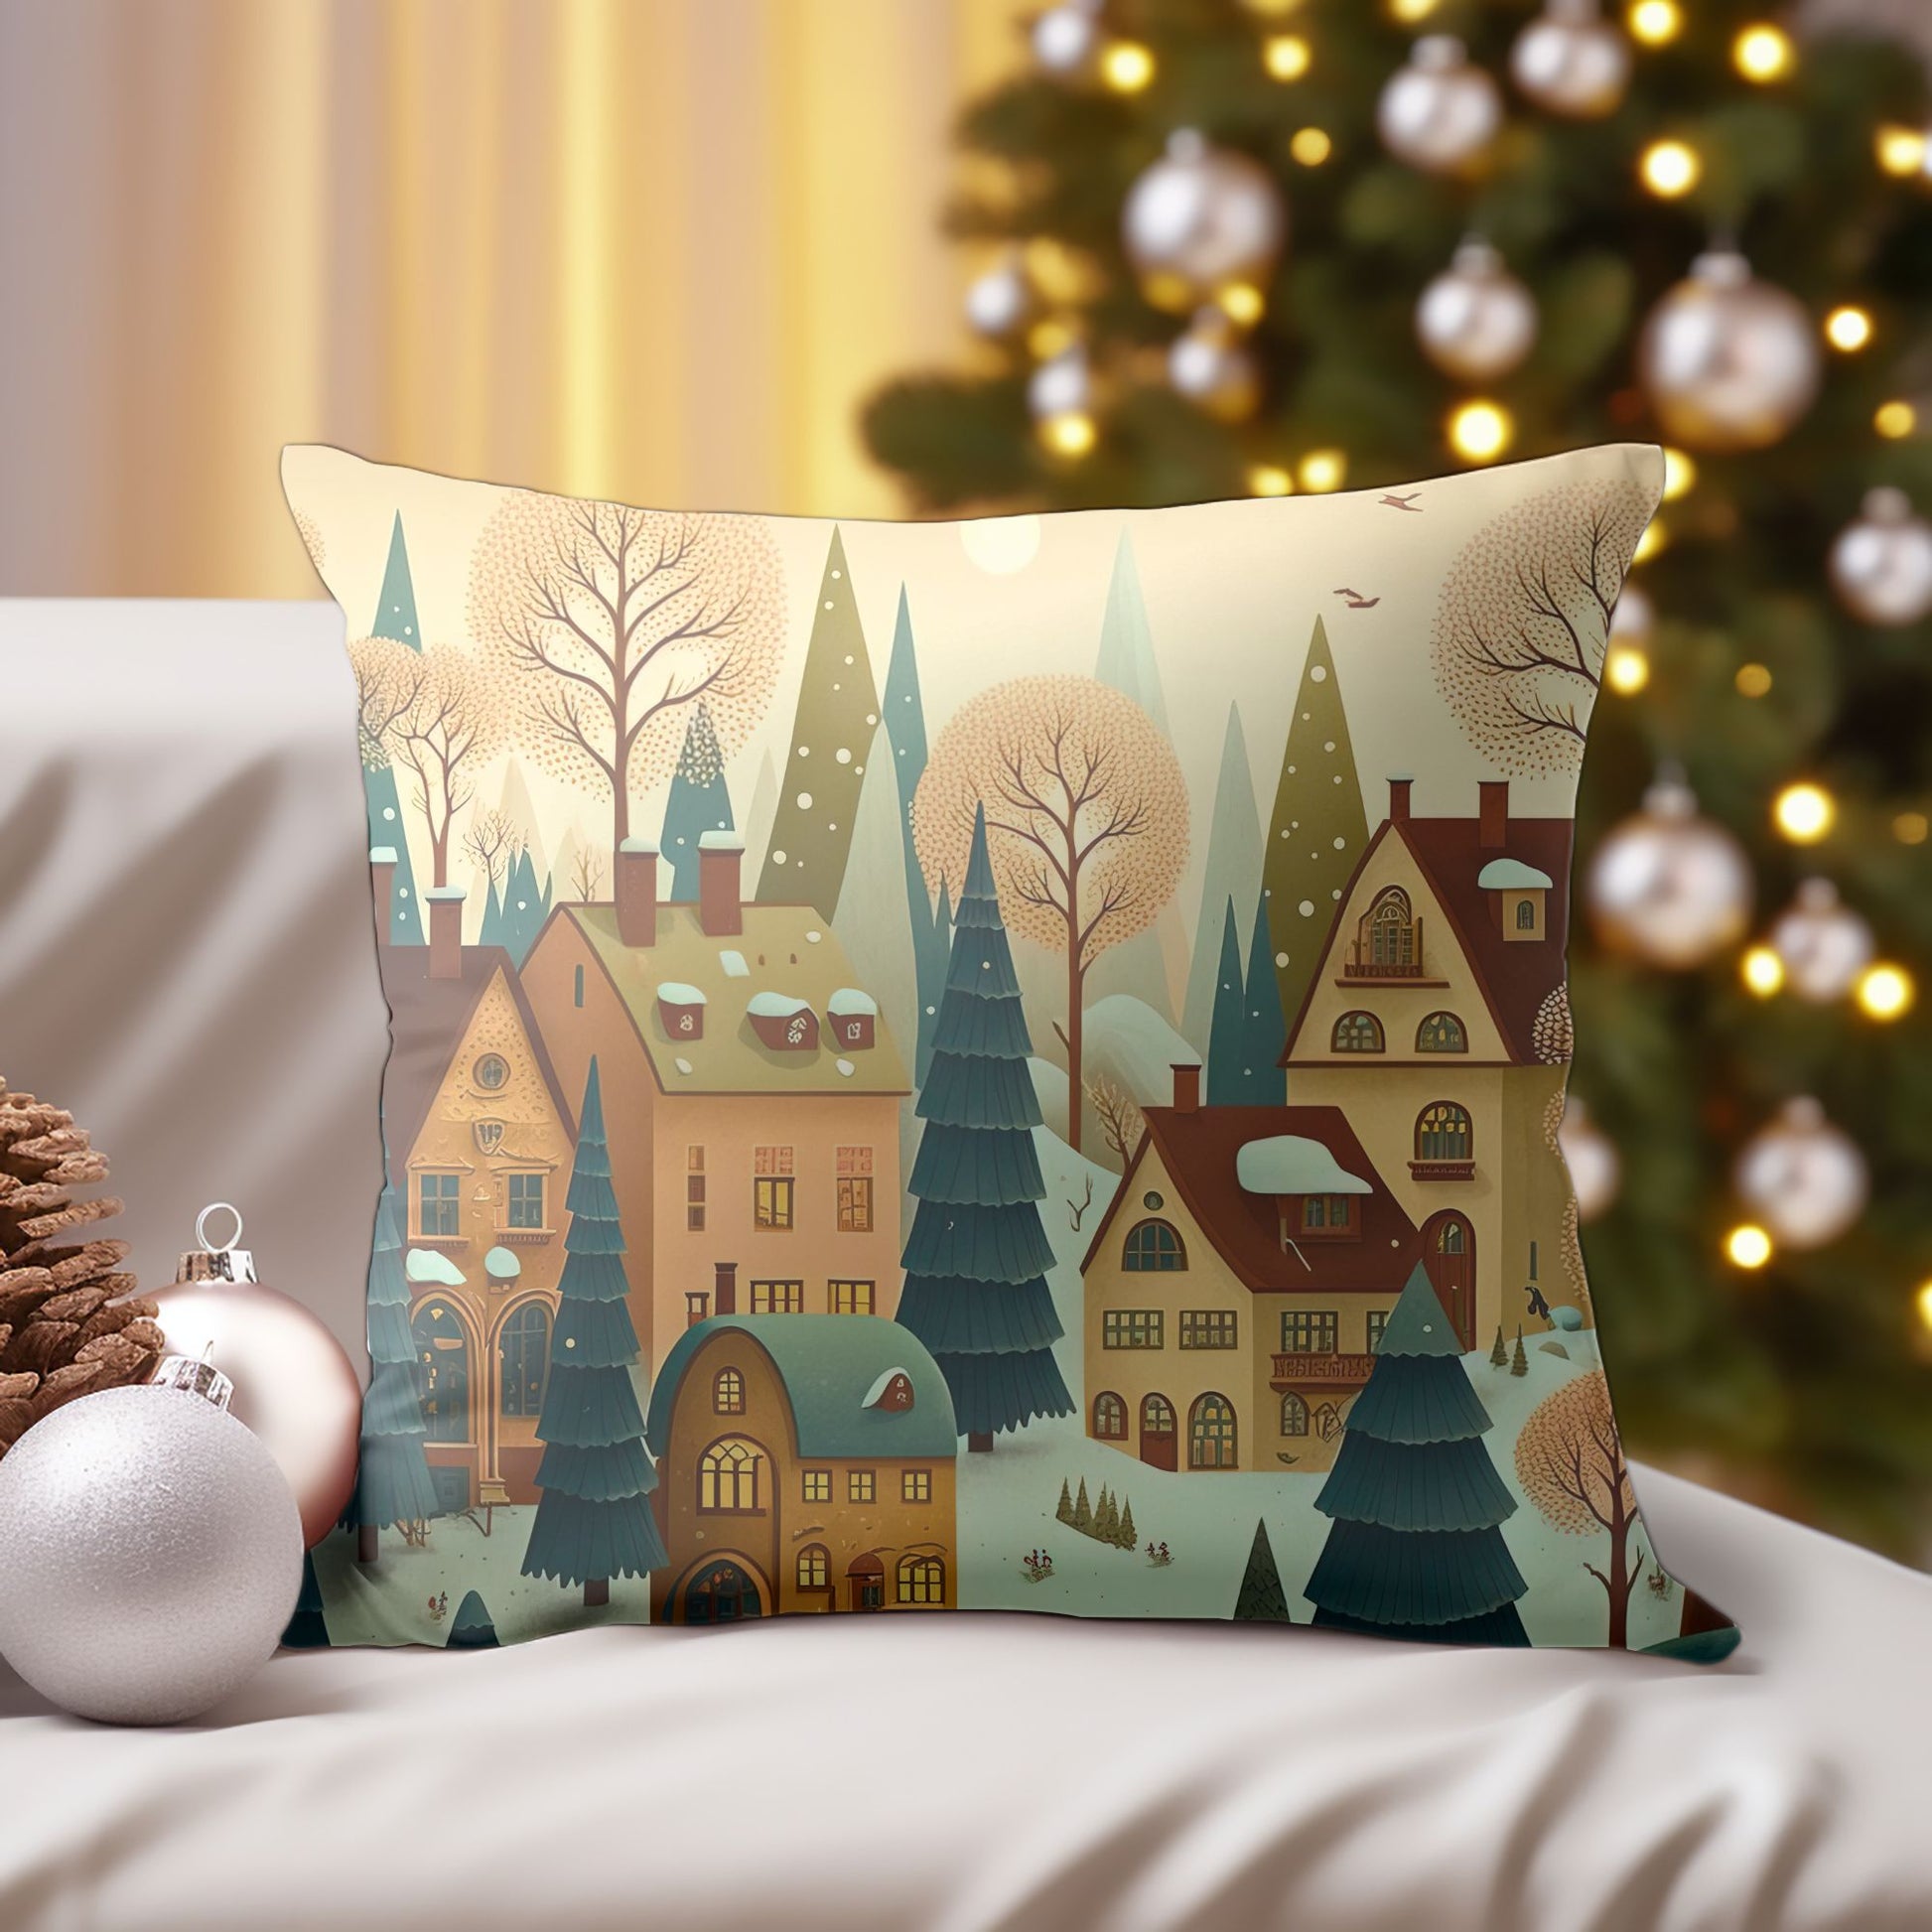 Christmas Theme Pillow for a Cozy Seasonal Decor